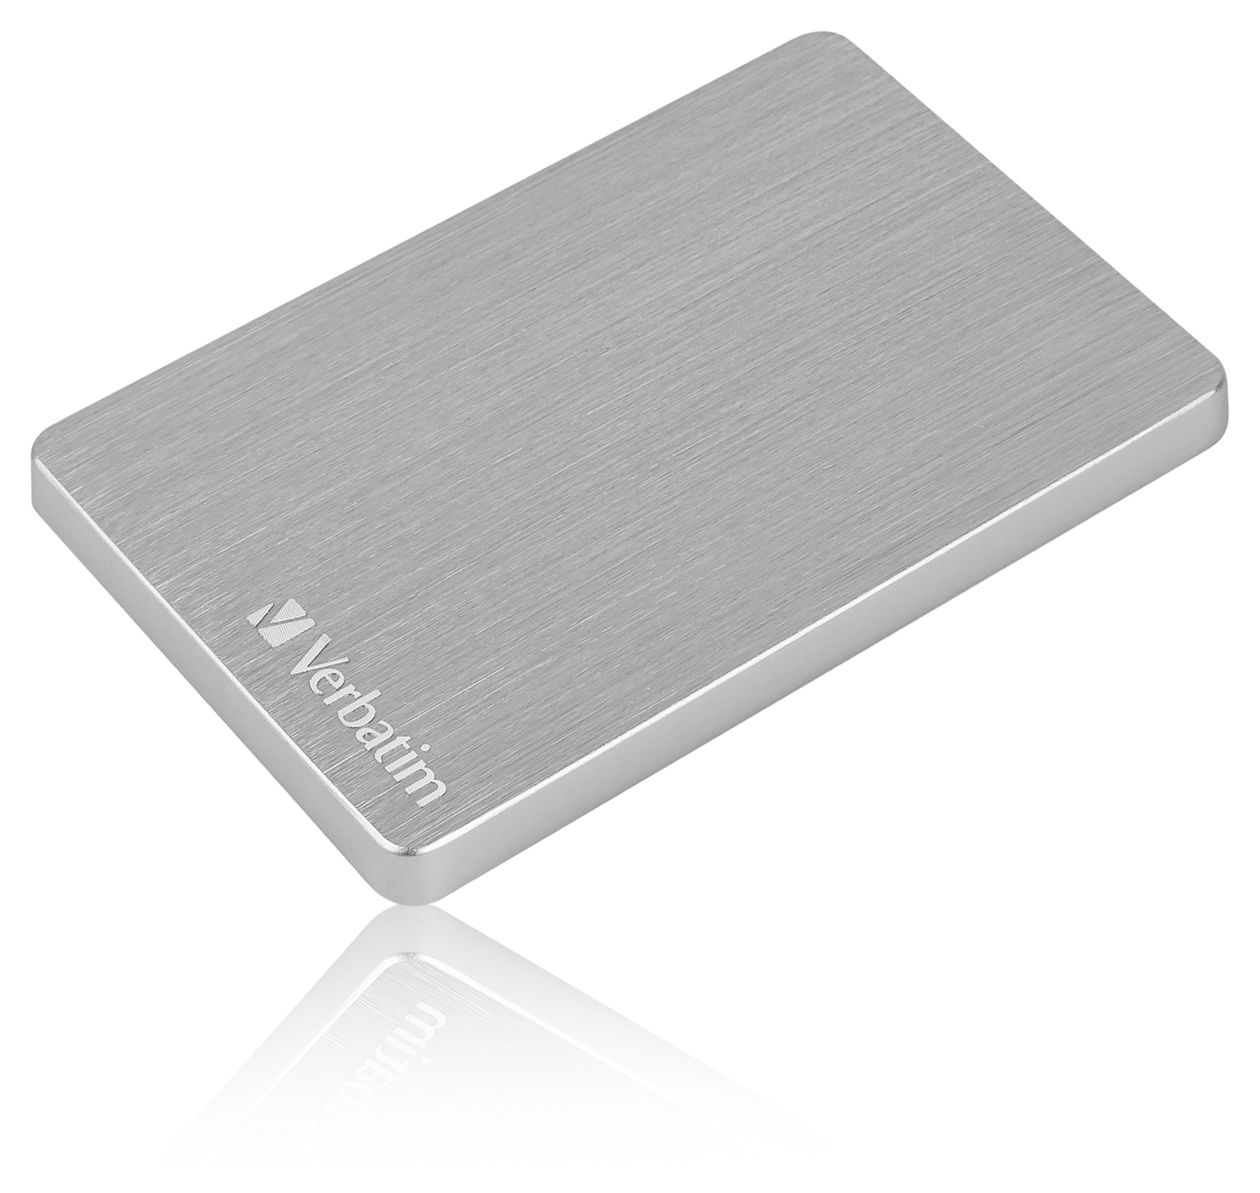 Store 'n' Go Alu Slim Portable 1 TB externe Festplatte 2.5" (Silber) 